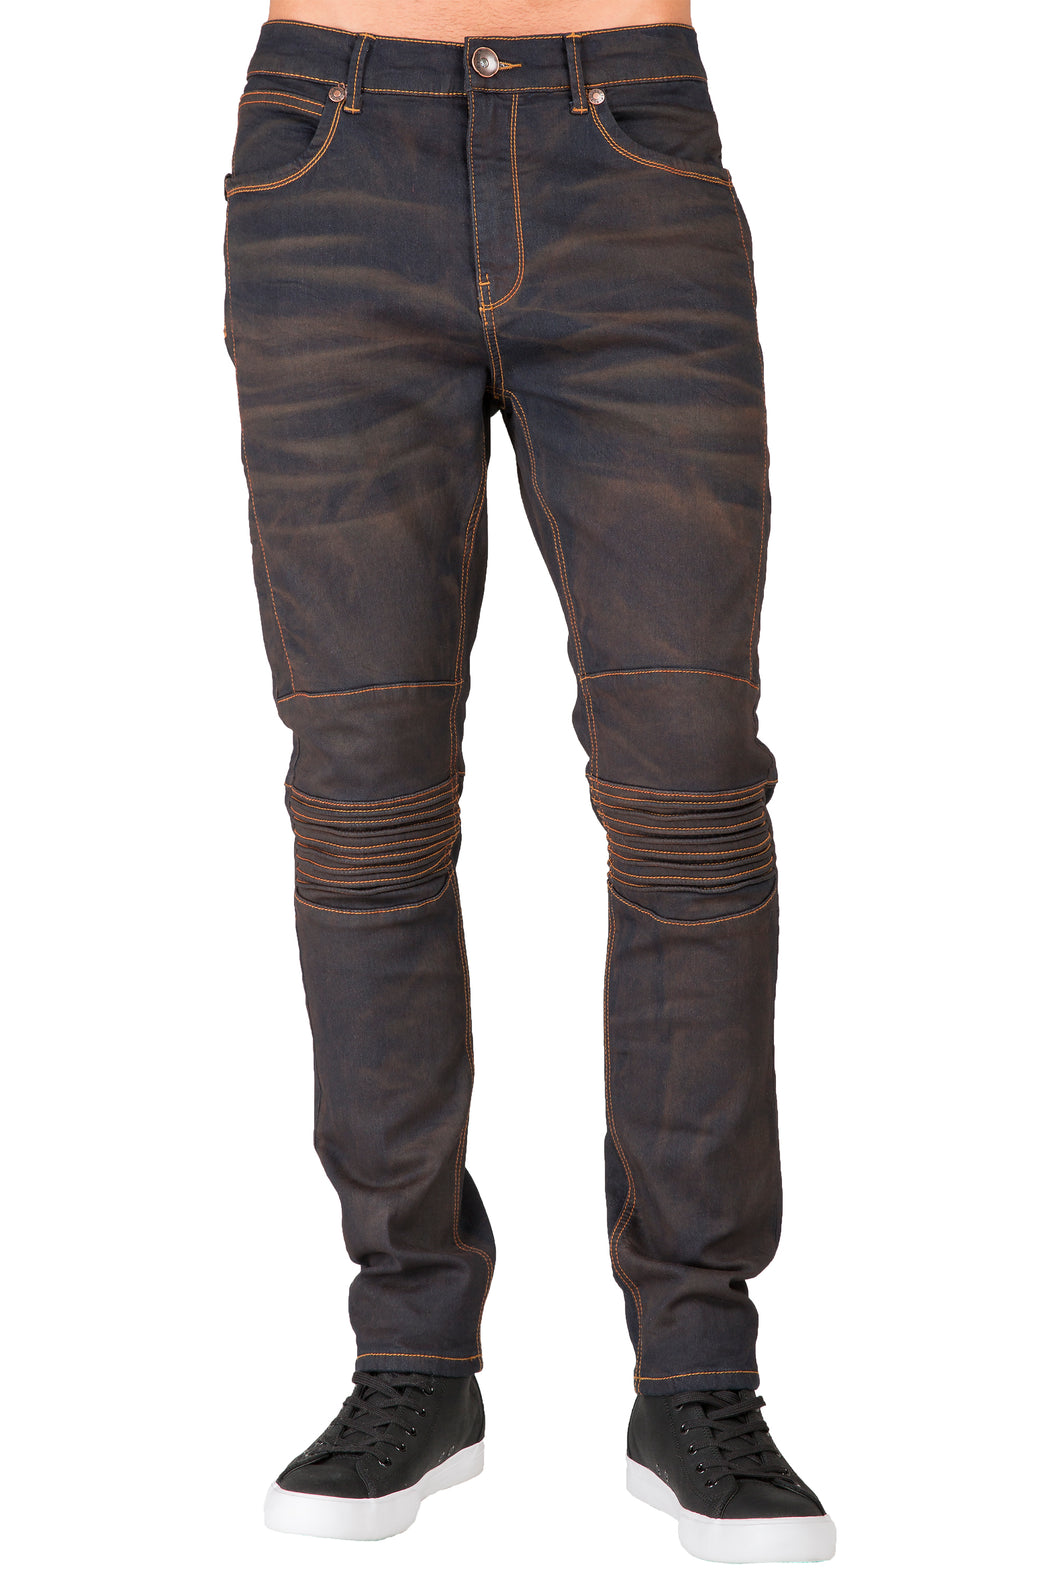 Men's Premium Stretch Denim Moto Jeans Slim Tapered Fit Copper Wash